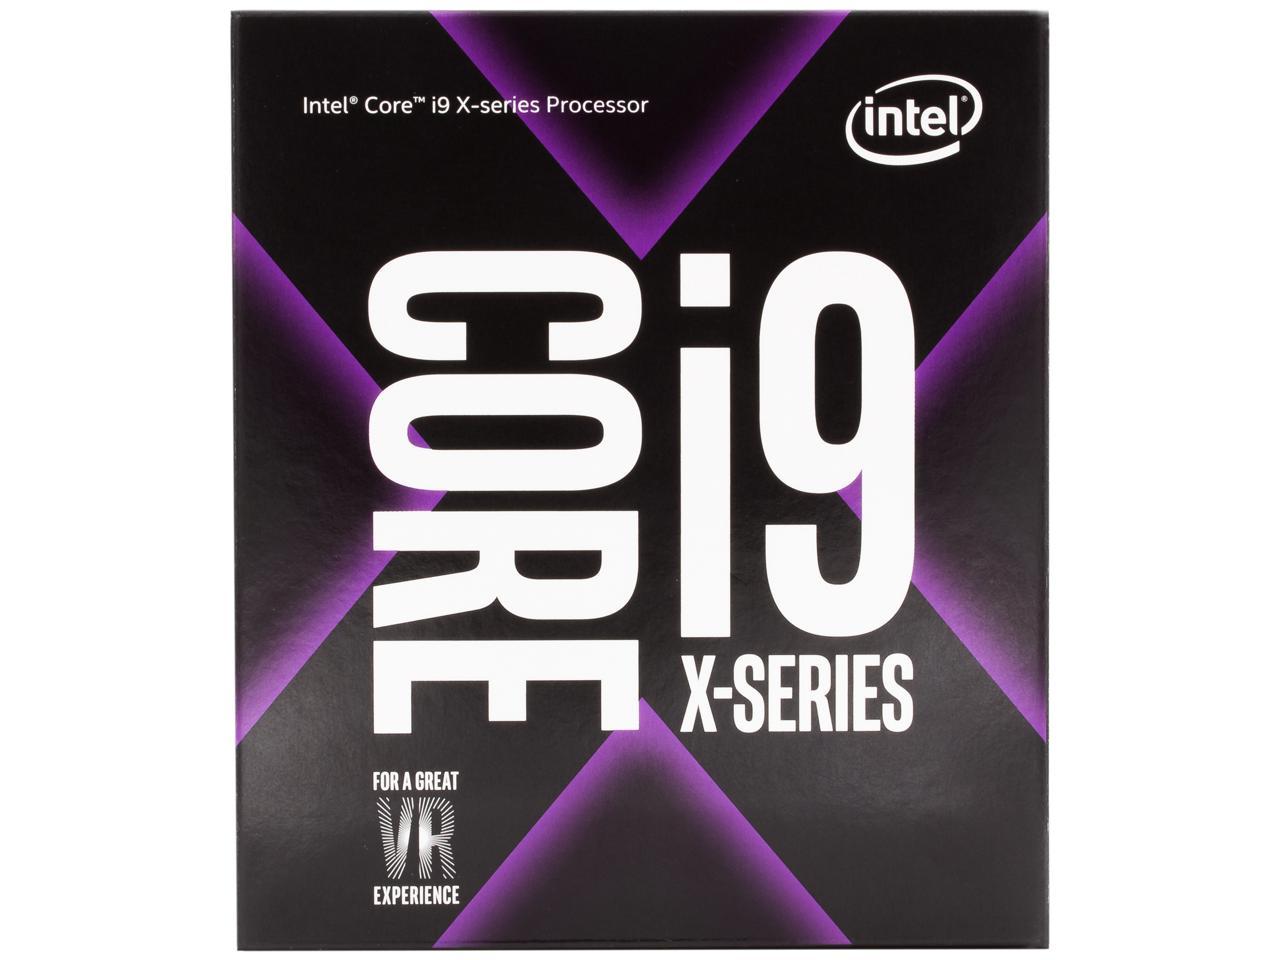 Intel Core i9-7940X Skylake X 14-Core 3.1 GHz LGA 2066 165W BX80673I97940X Desktop Processor